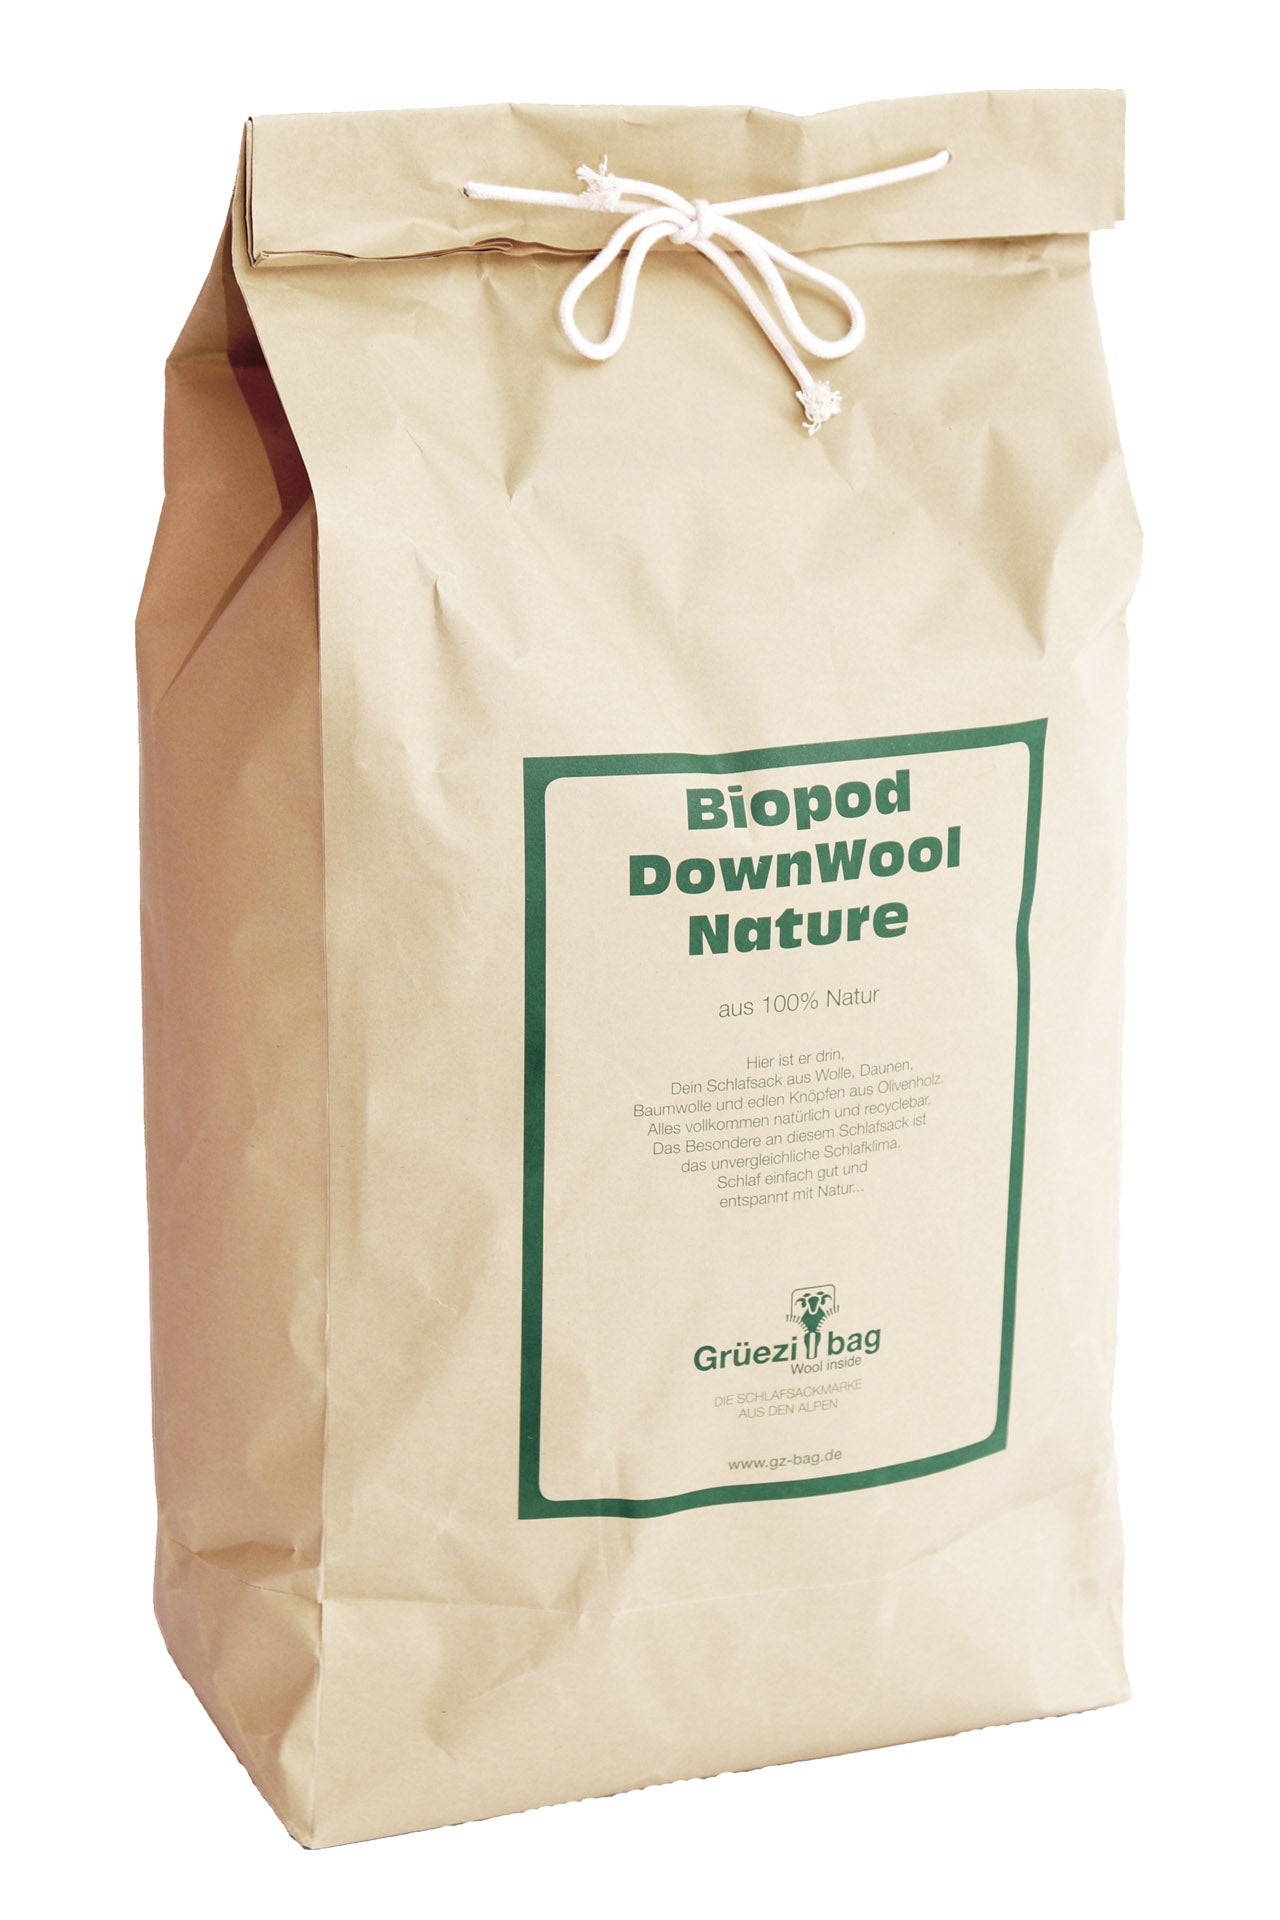 Grüezi bag Biopod DownWool Nature Comfort - ausgeliefert im Papierbeutel